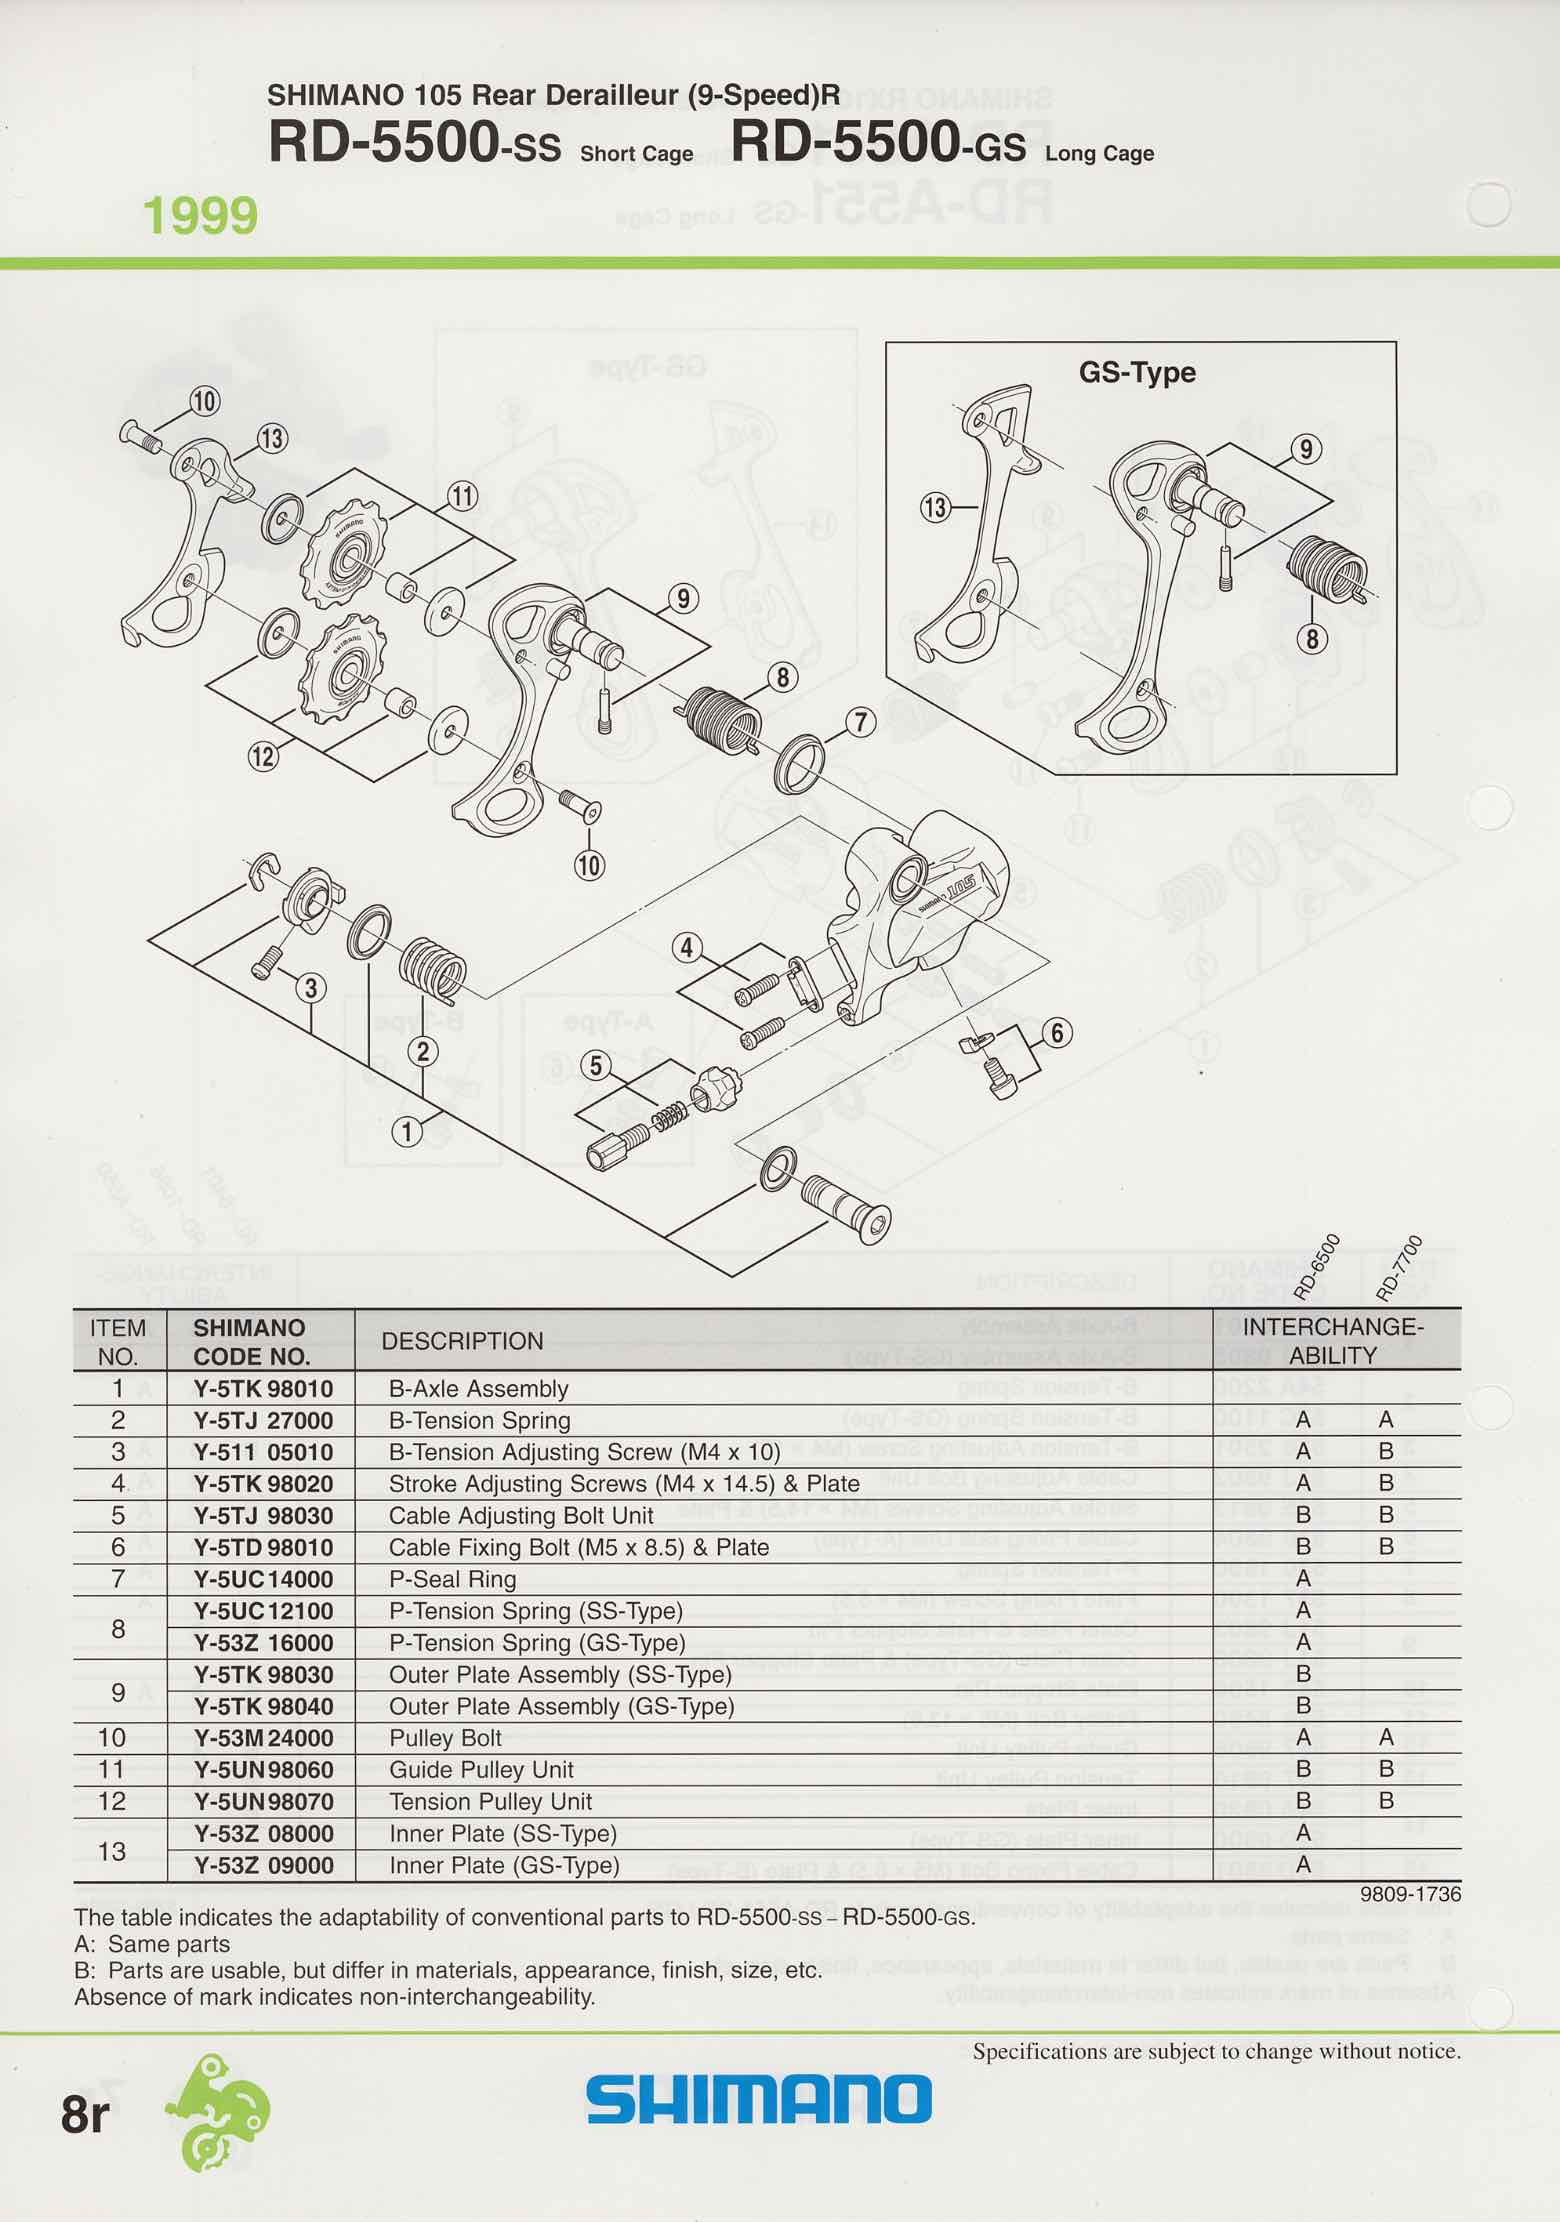 Shimano Spare Parts Catalogue - 1994 to 2004 s5r p8r main image